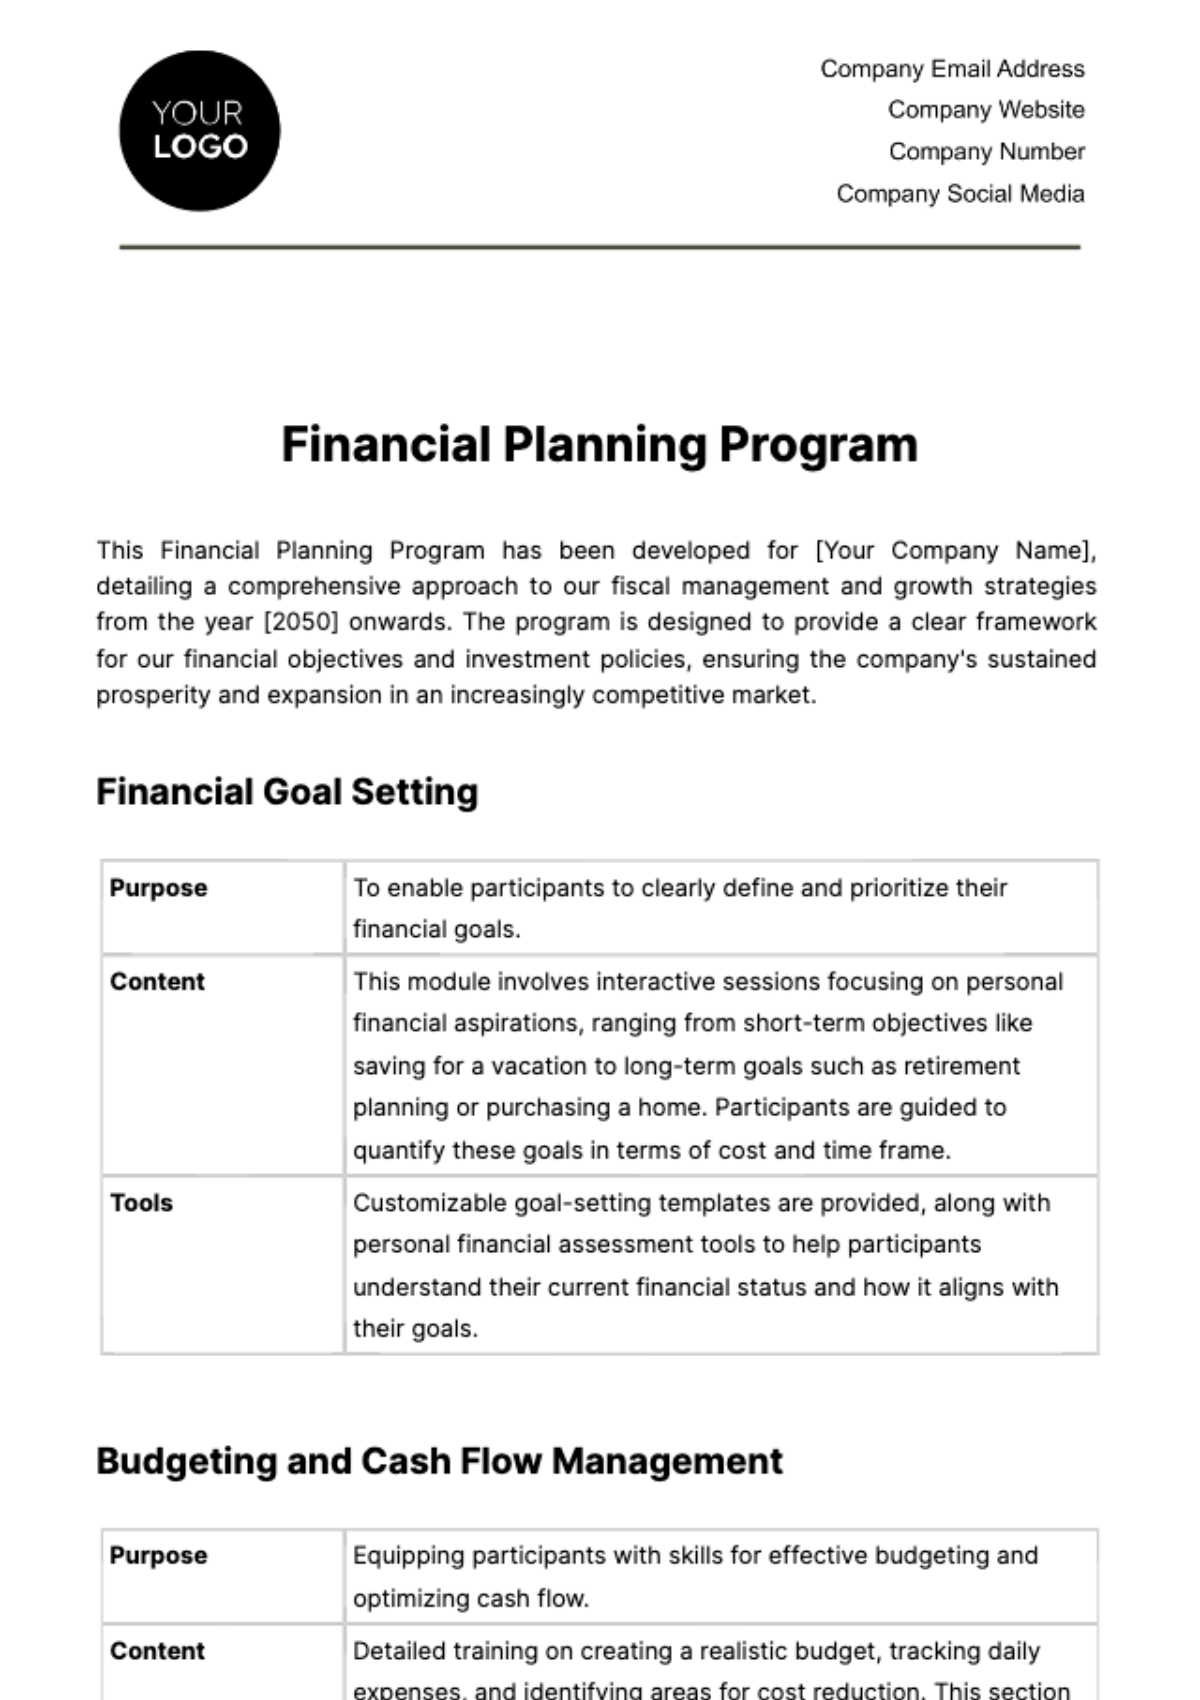 Financial Planning Program Template